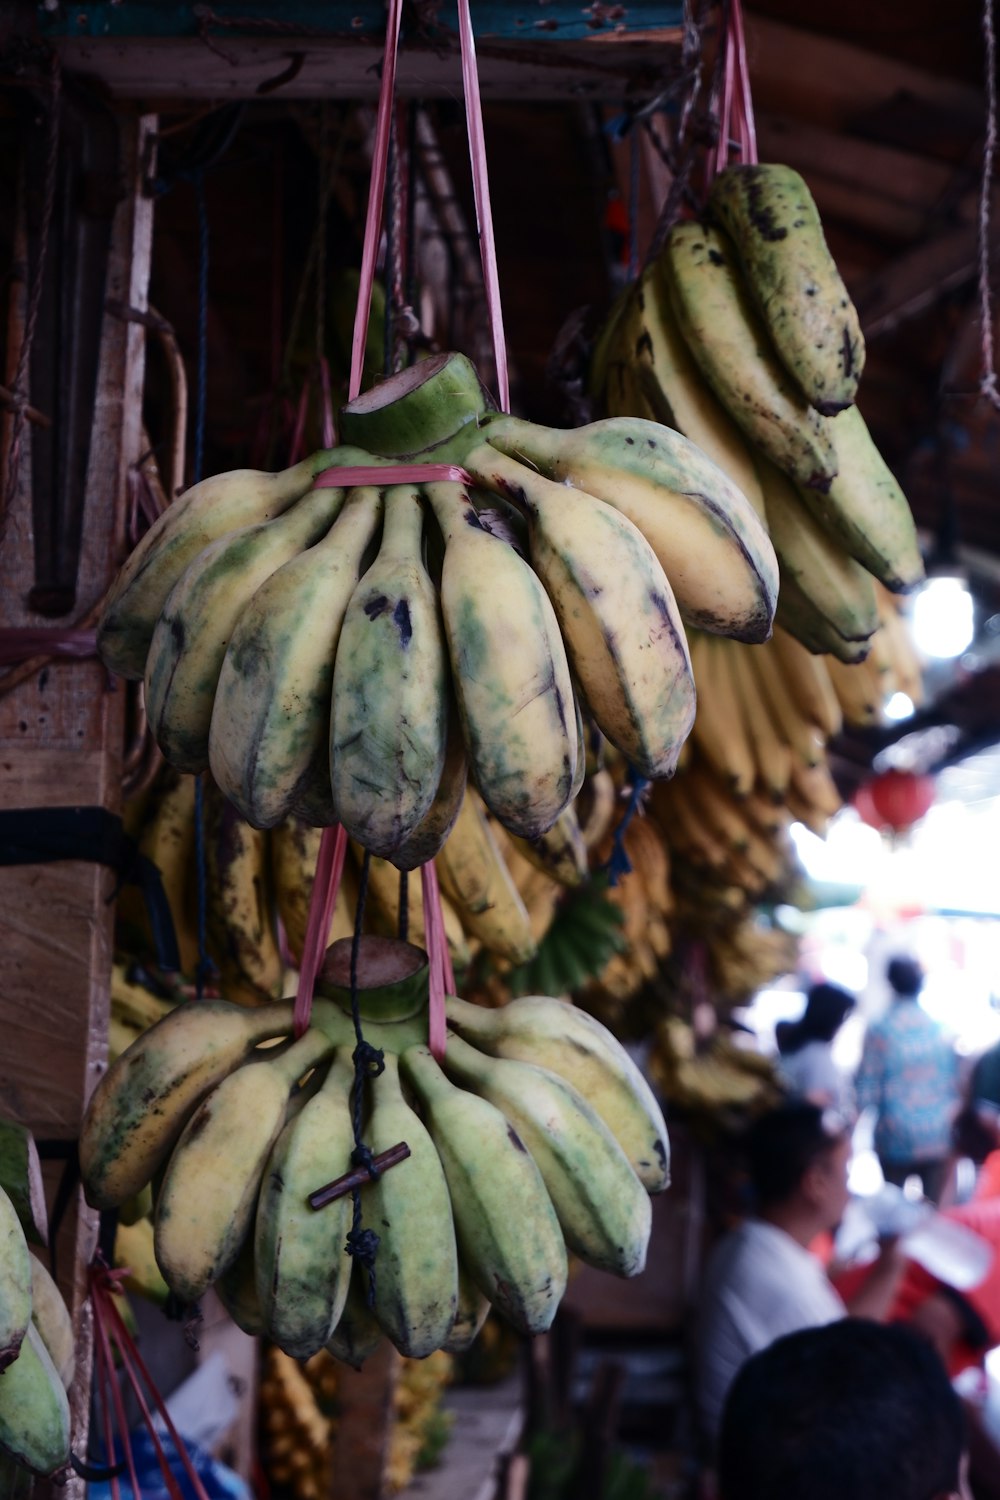 hanged yellow bananas